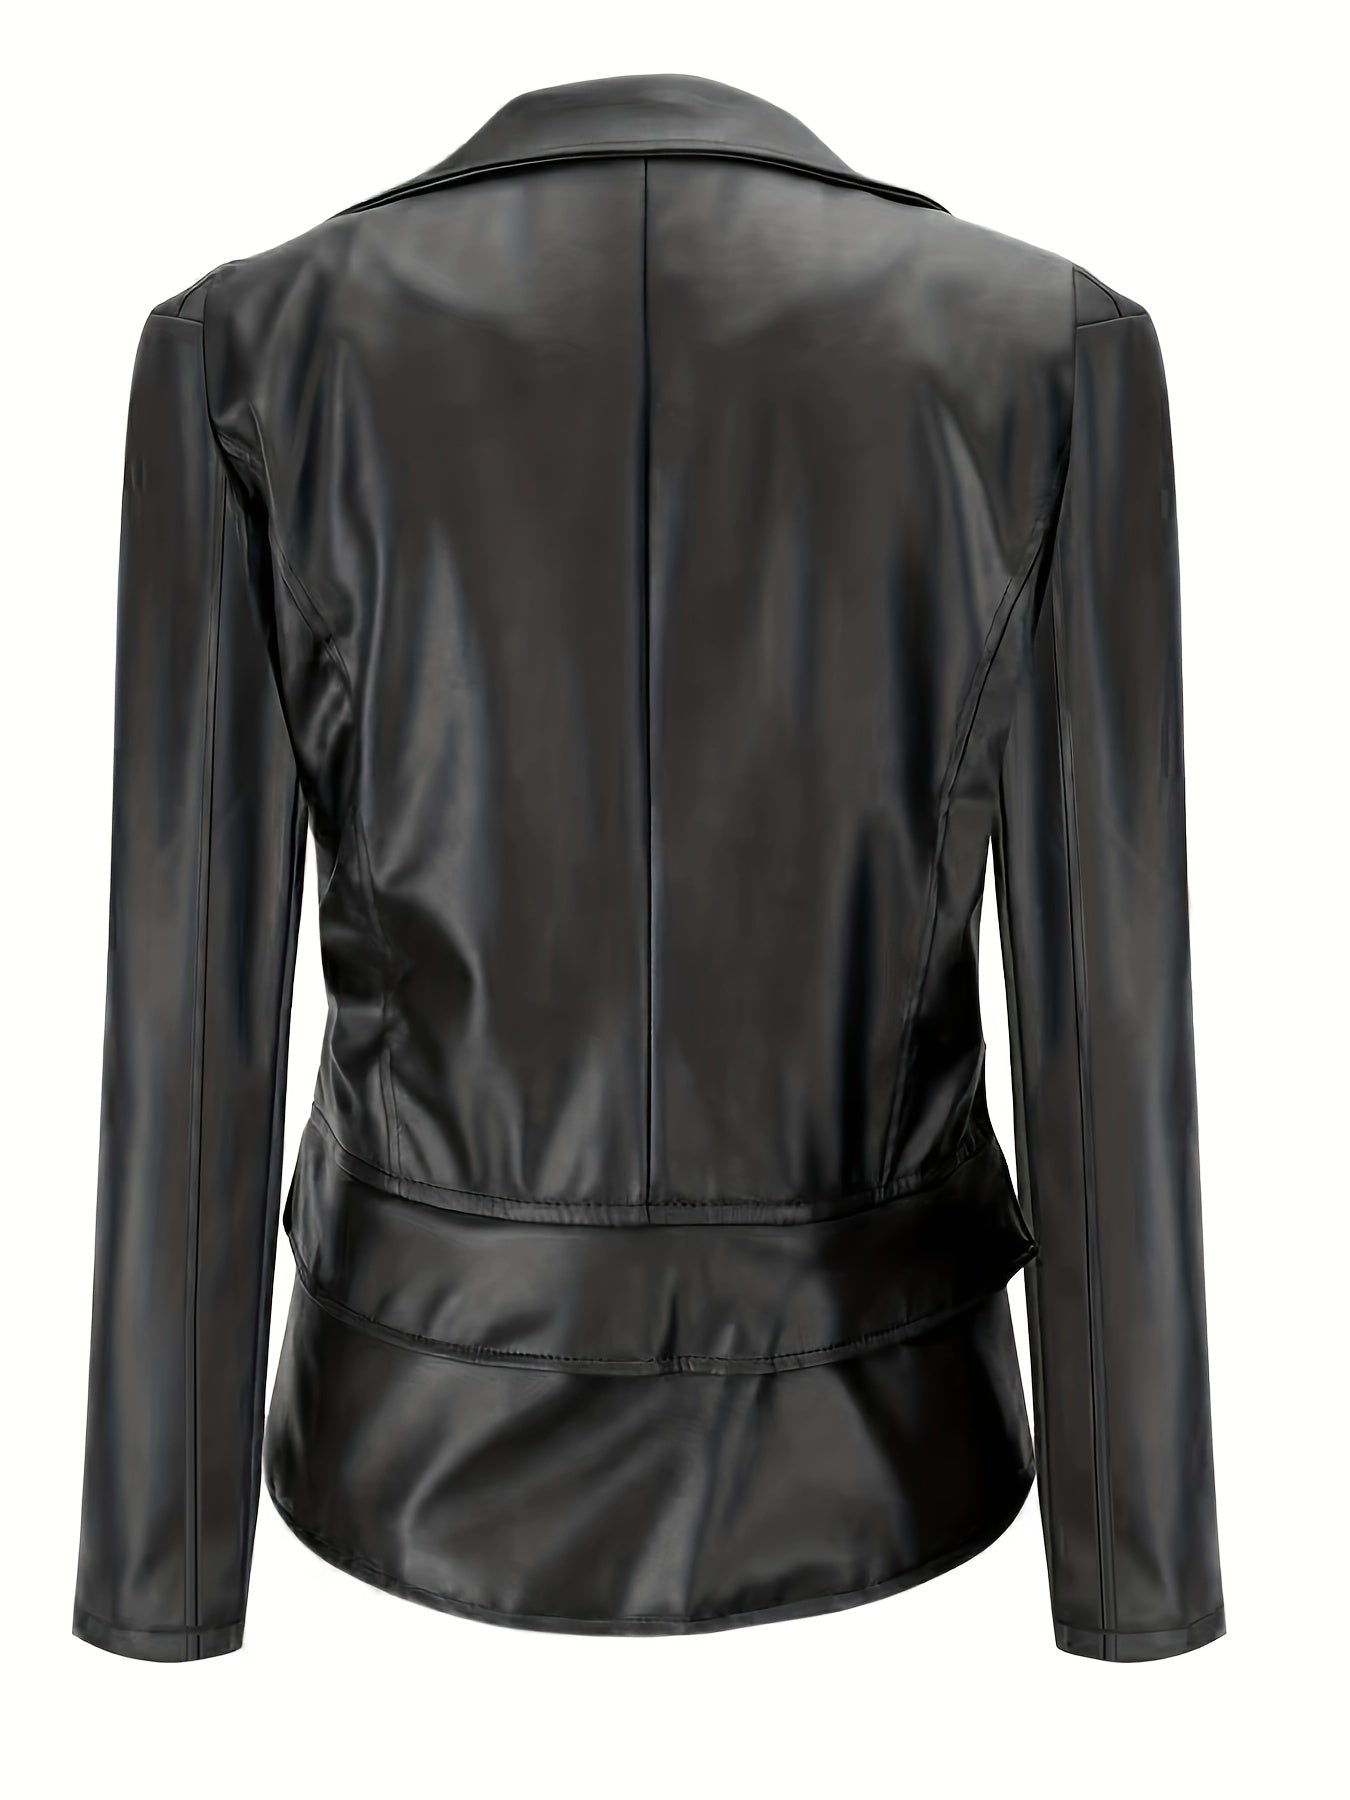 Antmvs Two-way Wear Zip Up Jacket, Elegant Long Sleeve Lapel Neck Jacket, Women's Clothing